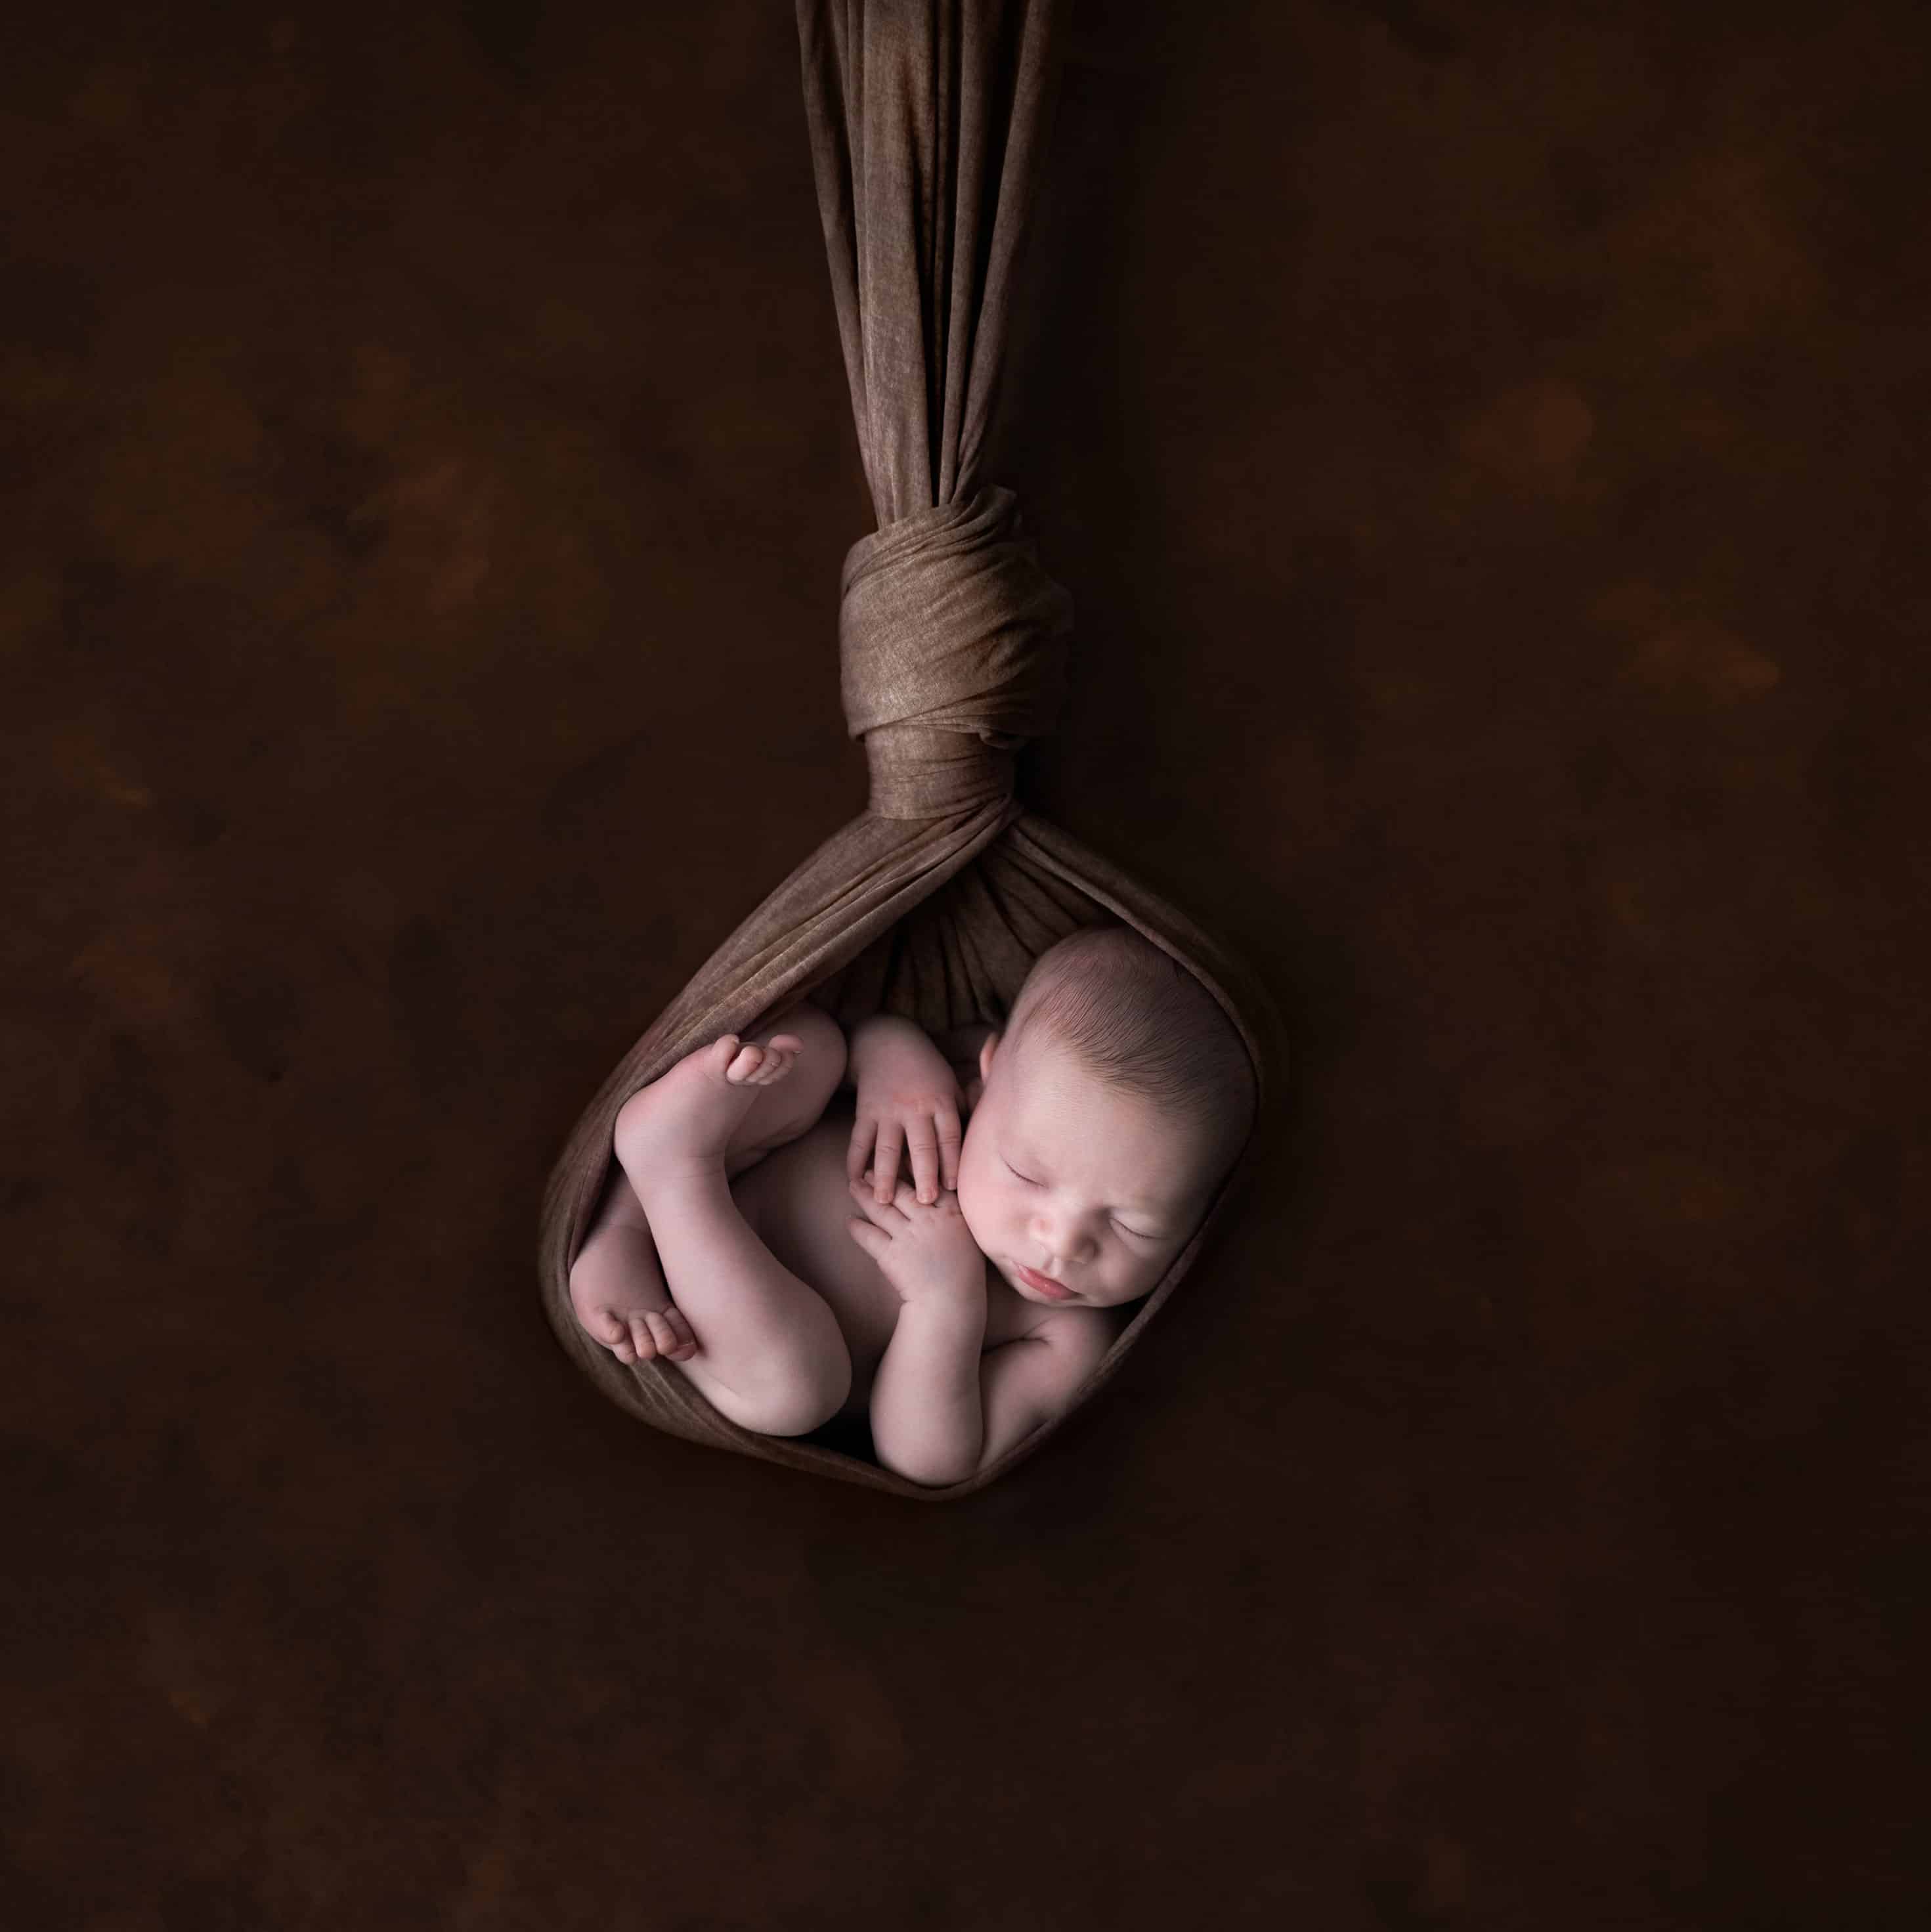 artistic cute newborn baby photos done in Edinburgh photography studio